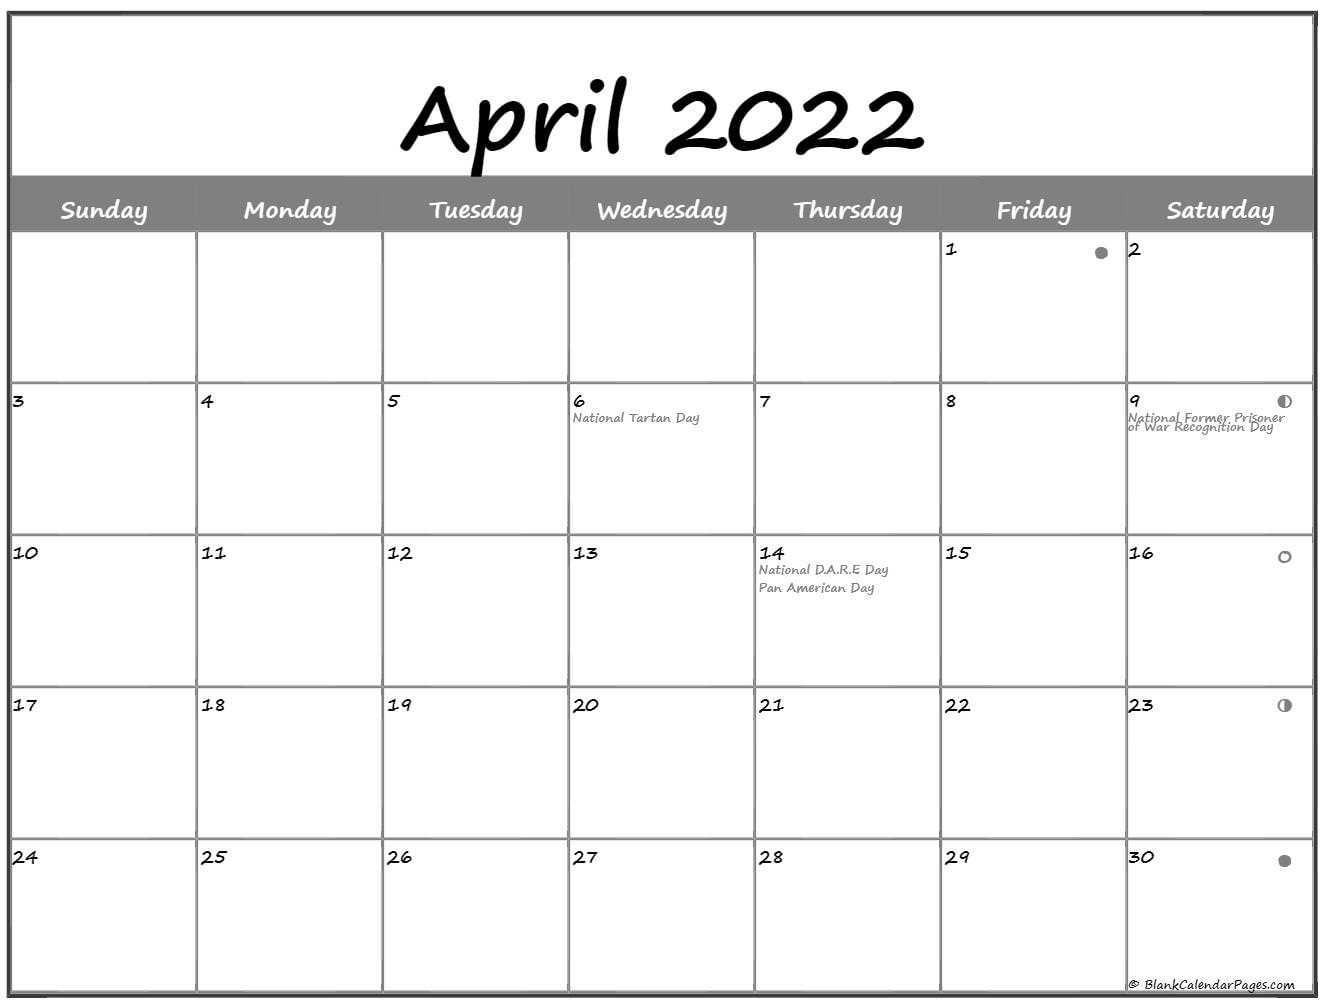 April 2022 Lunar Calendar | Moon Phase Calendar